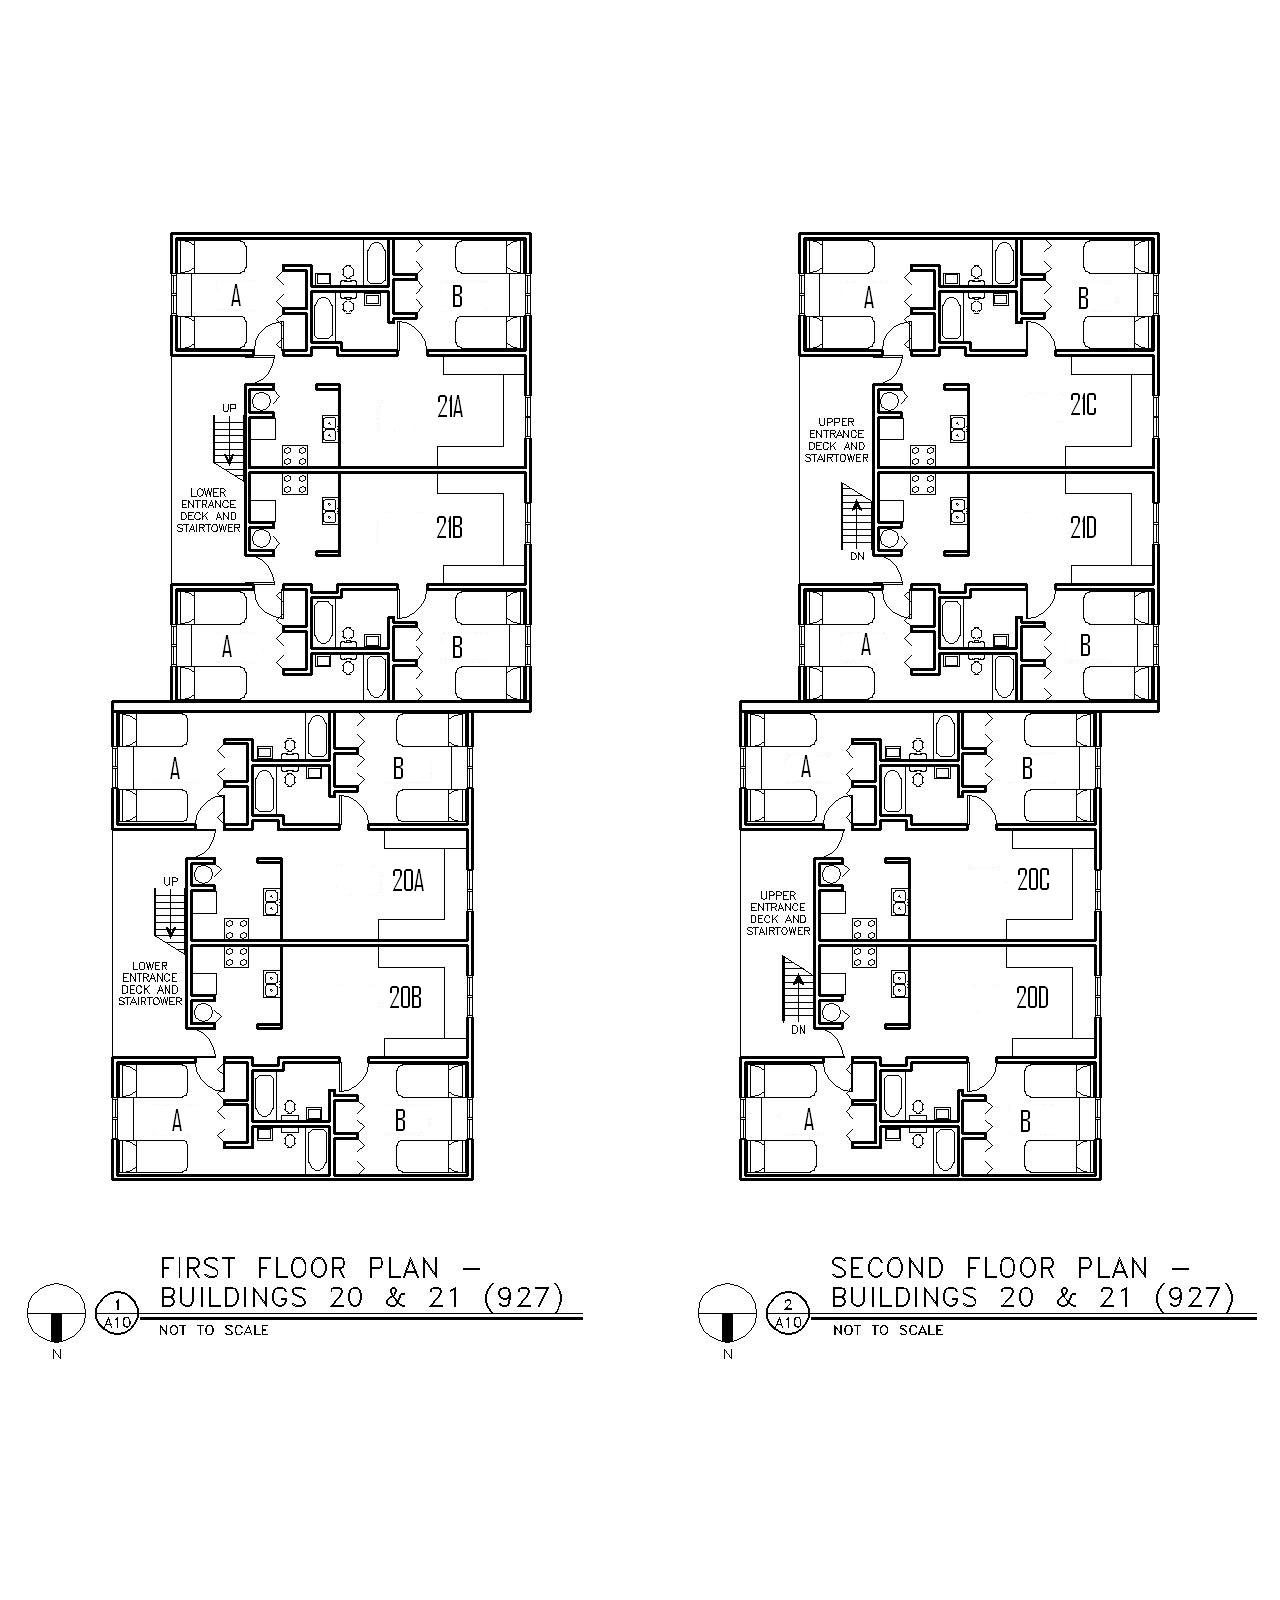 Floor Plan for Buildings 20 & 21